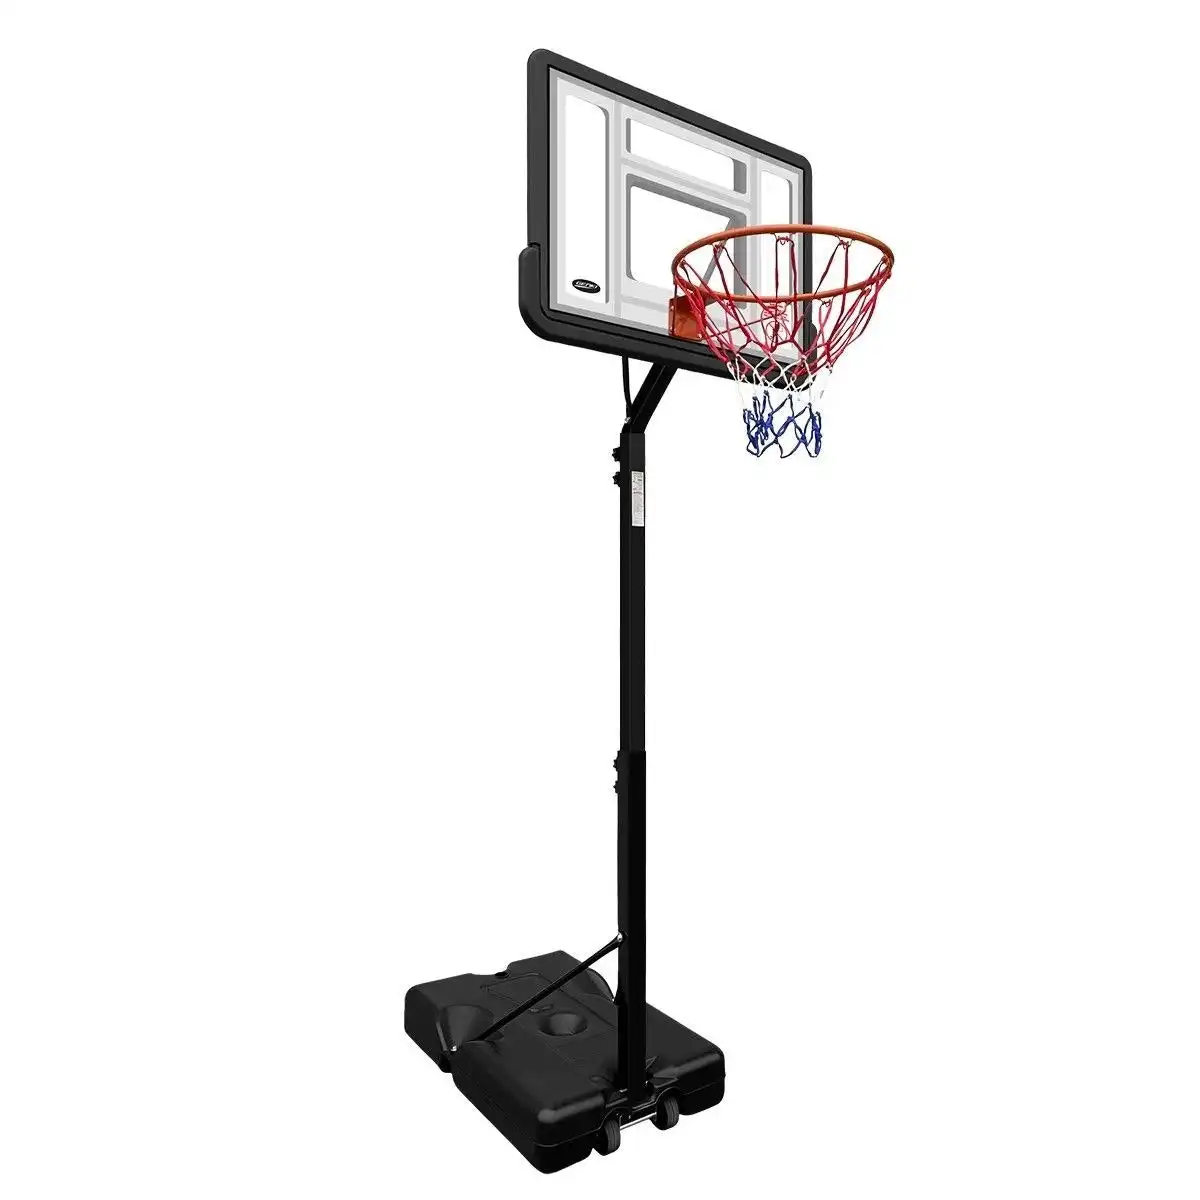 Genki  Adjustable 2.1-2.6m Portable Basketball Hoop Stand System Backboard Rim